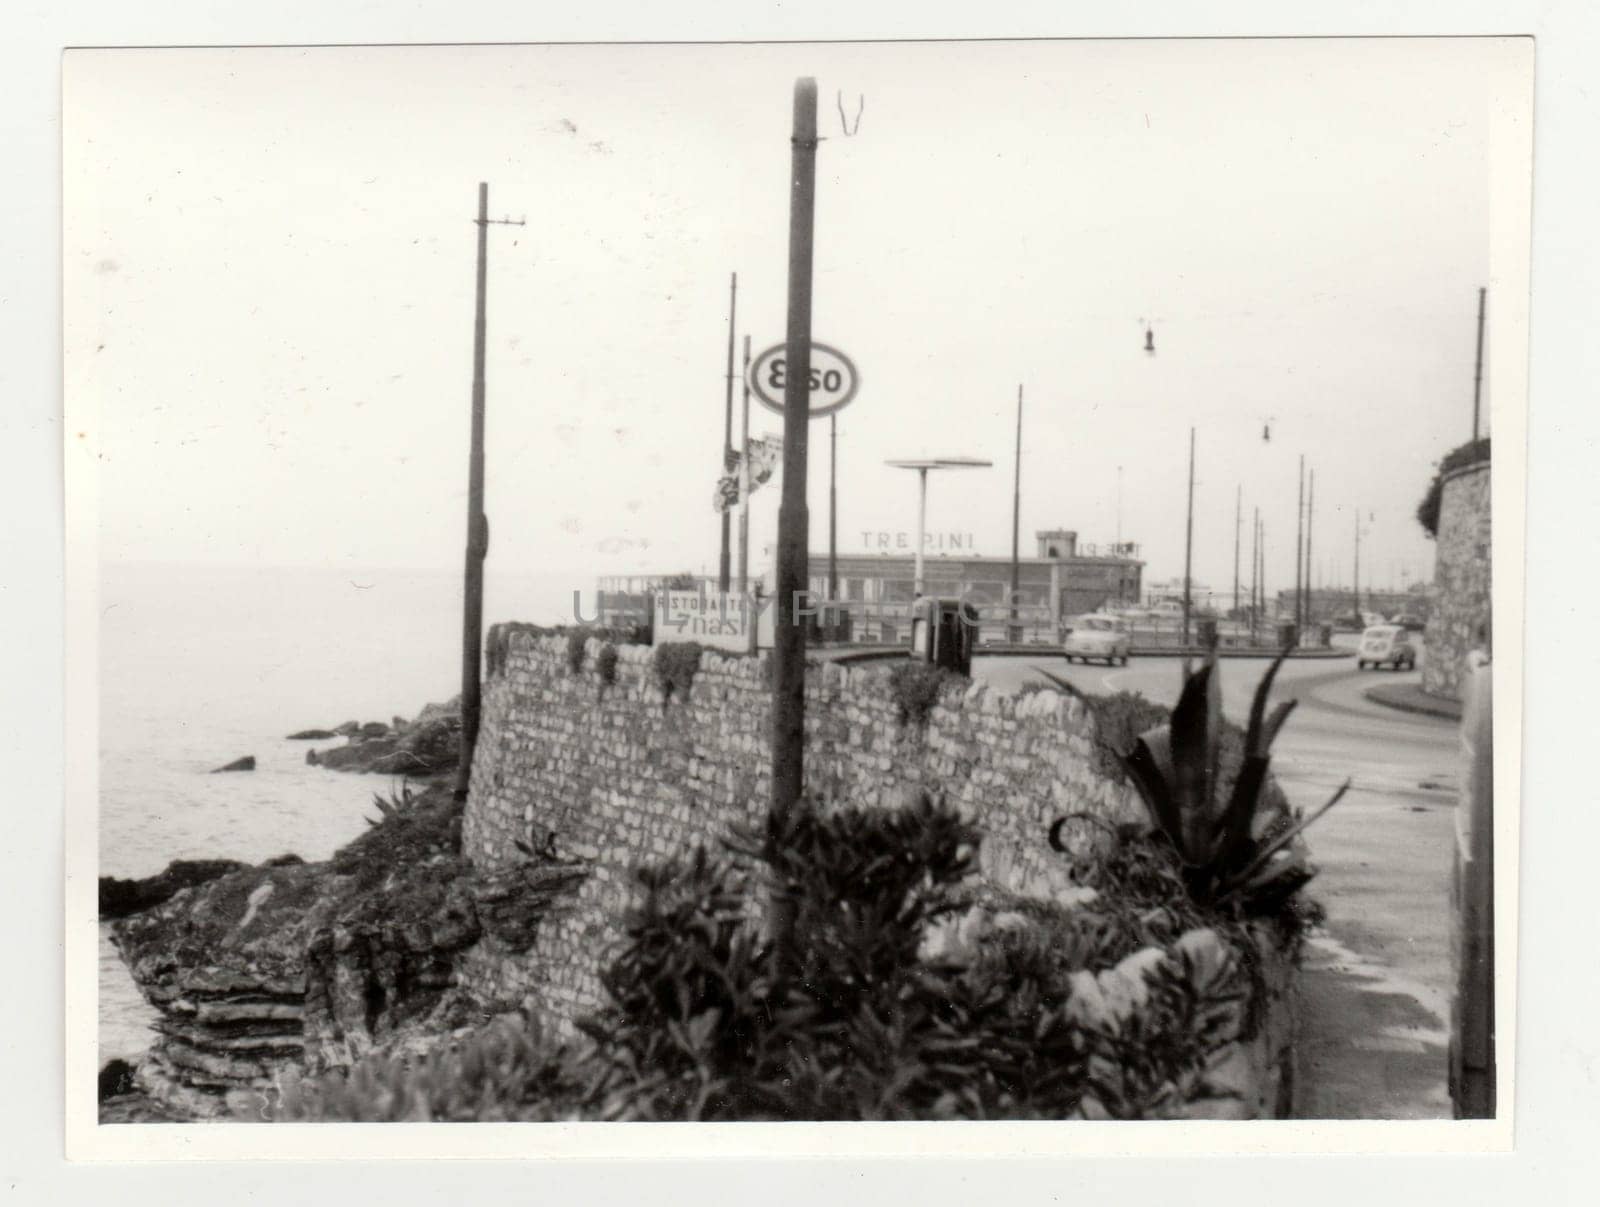 ITALY - CIRCA 1970s: Vintage photo shows the sea shore - the Italian riviera. Retro black and white photography. Circa 1970s.